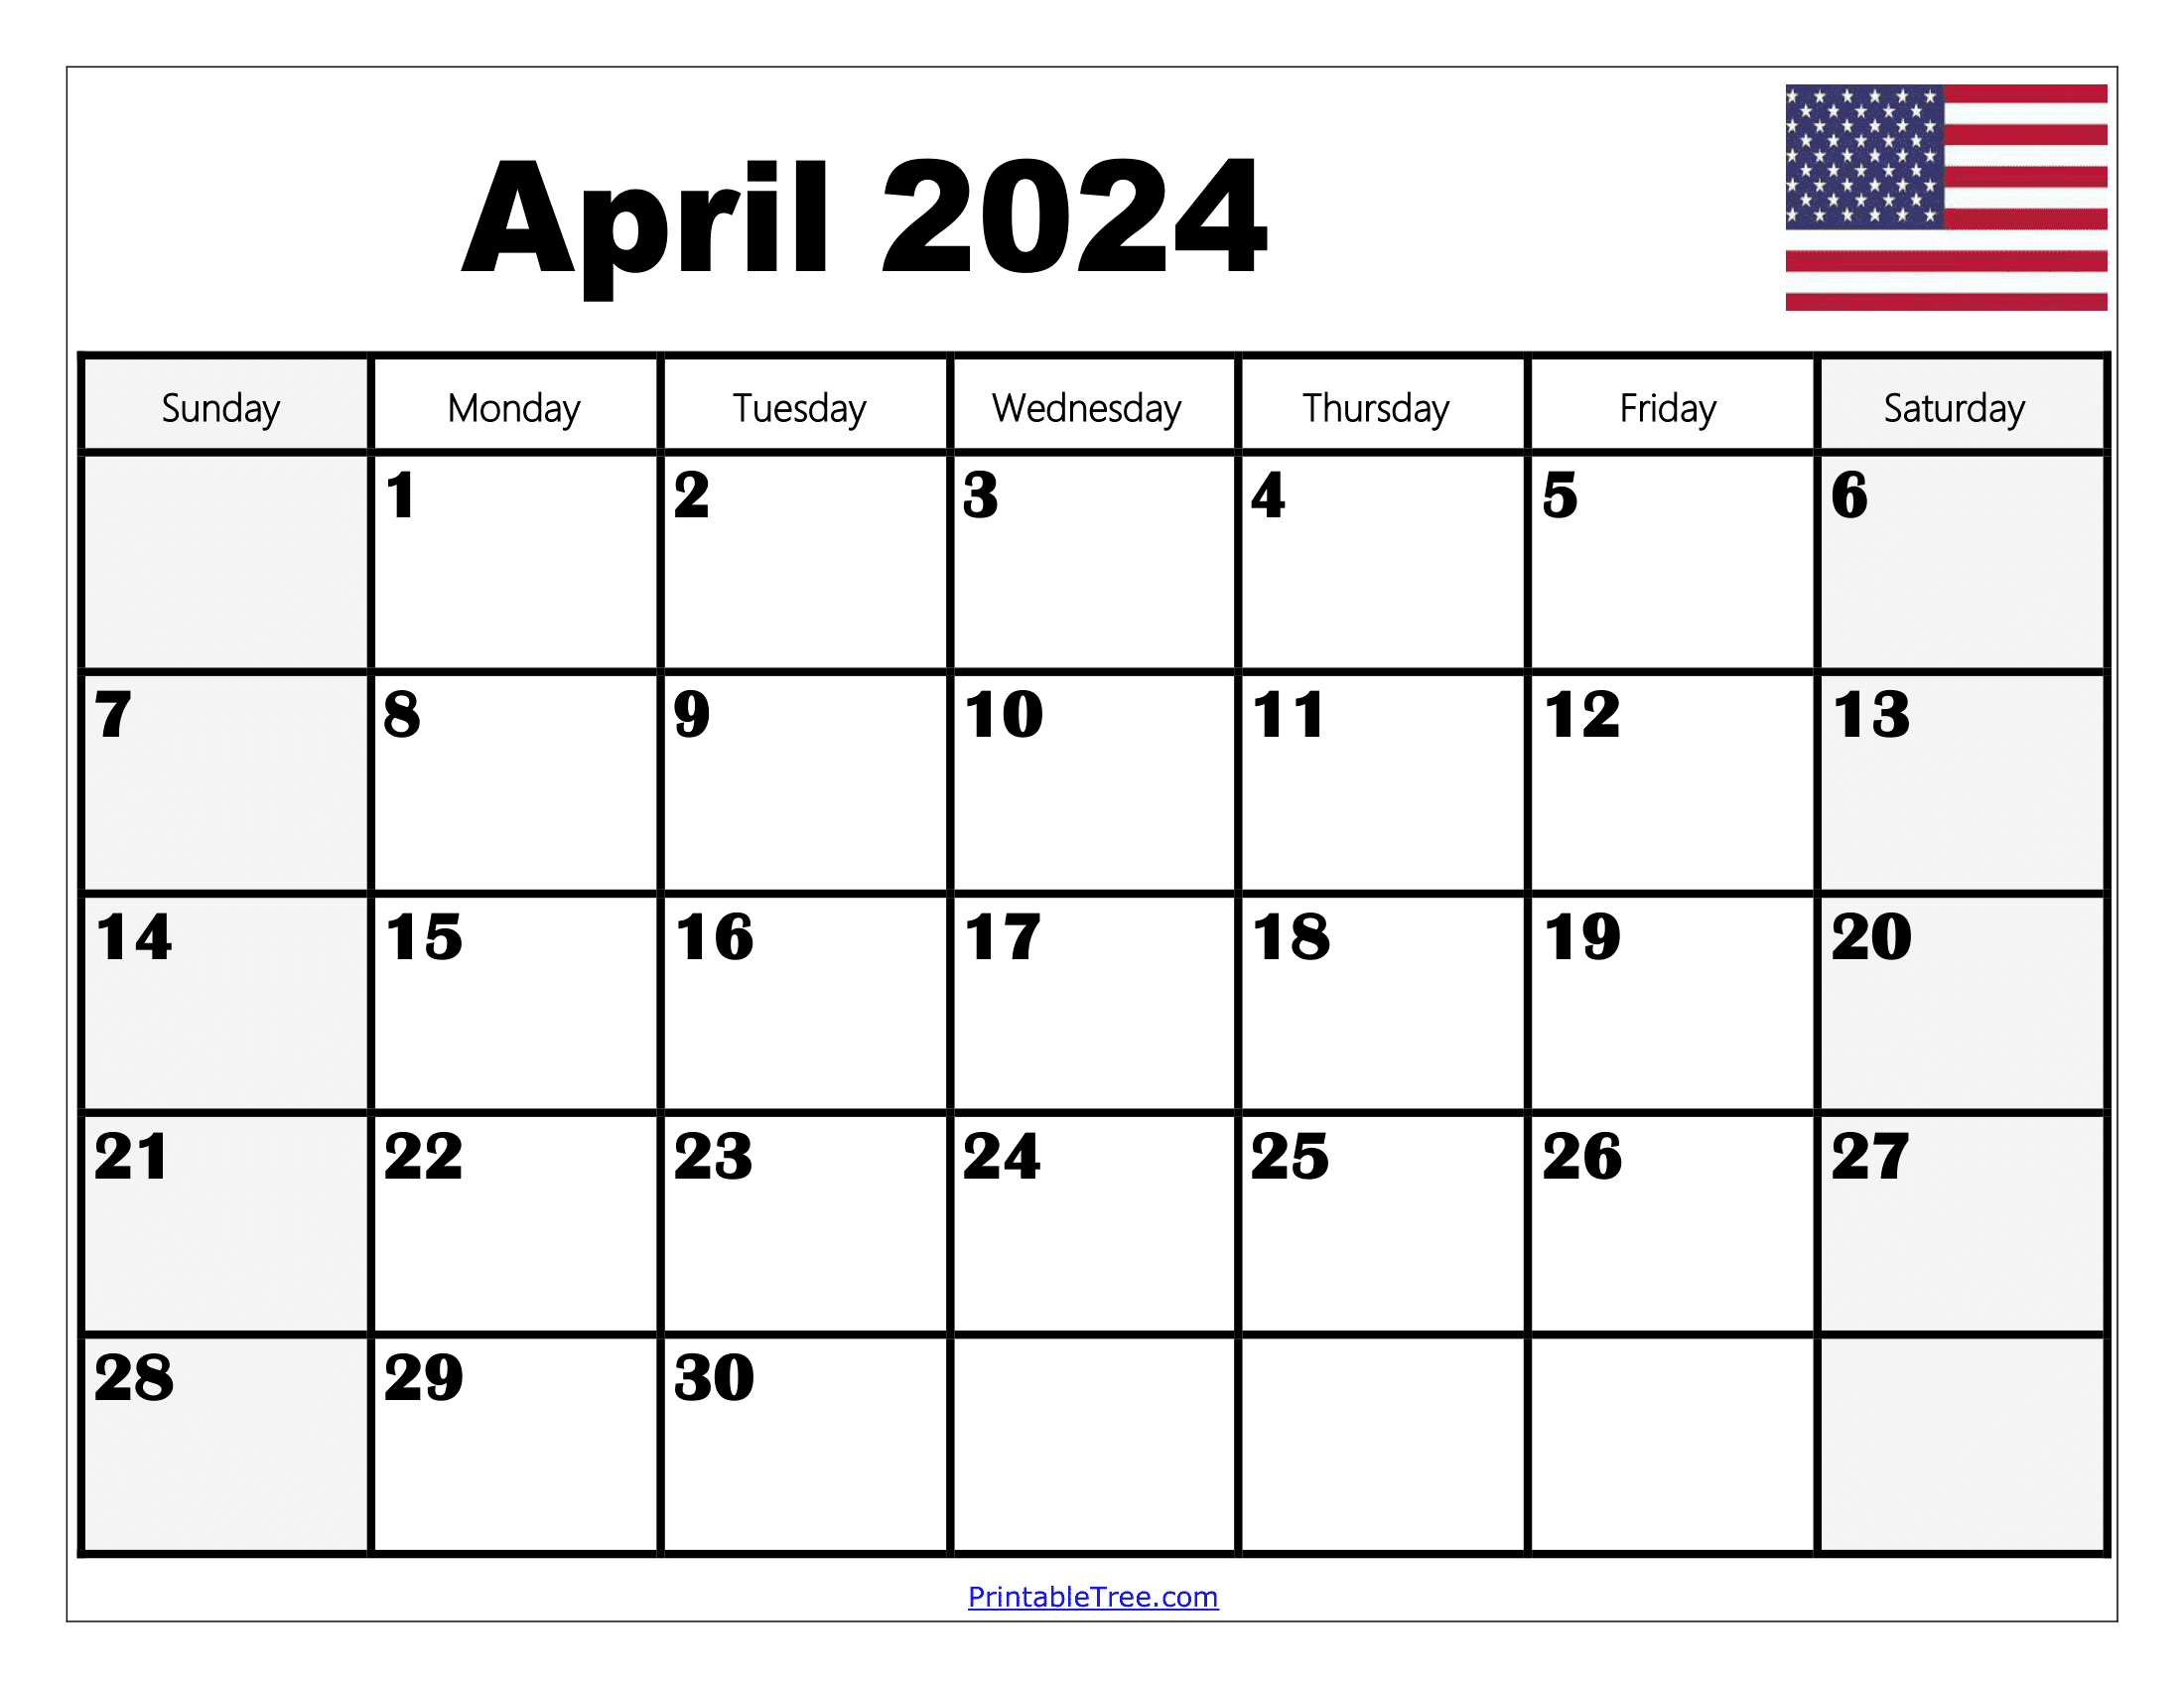 Blank April 2024 Calendar Printable Pdf Template With Holidays | Printable Calendar April 2024 To March 2025